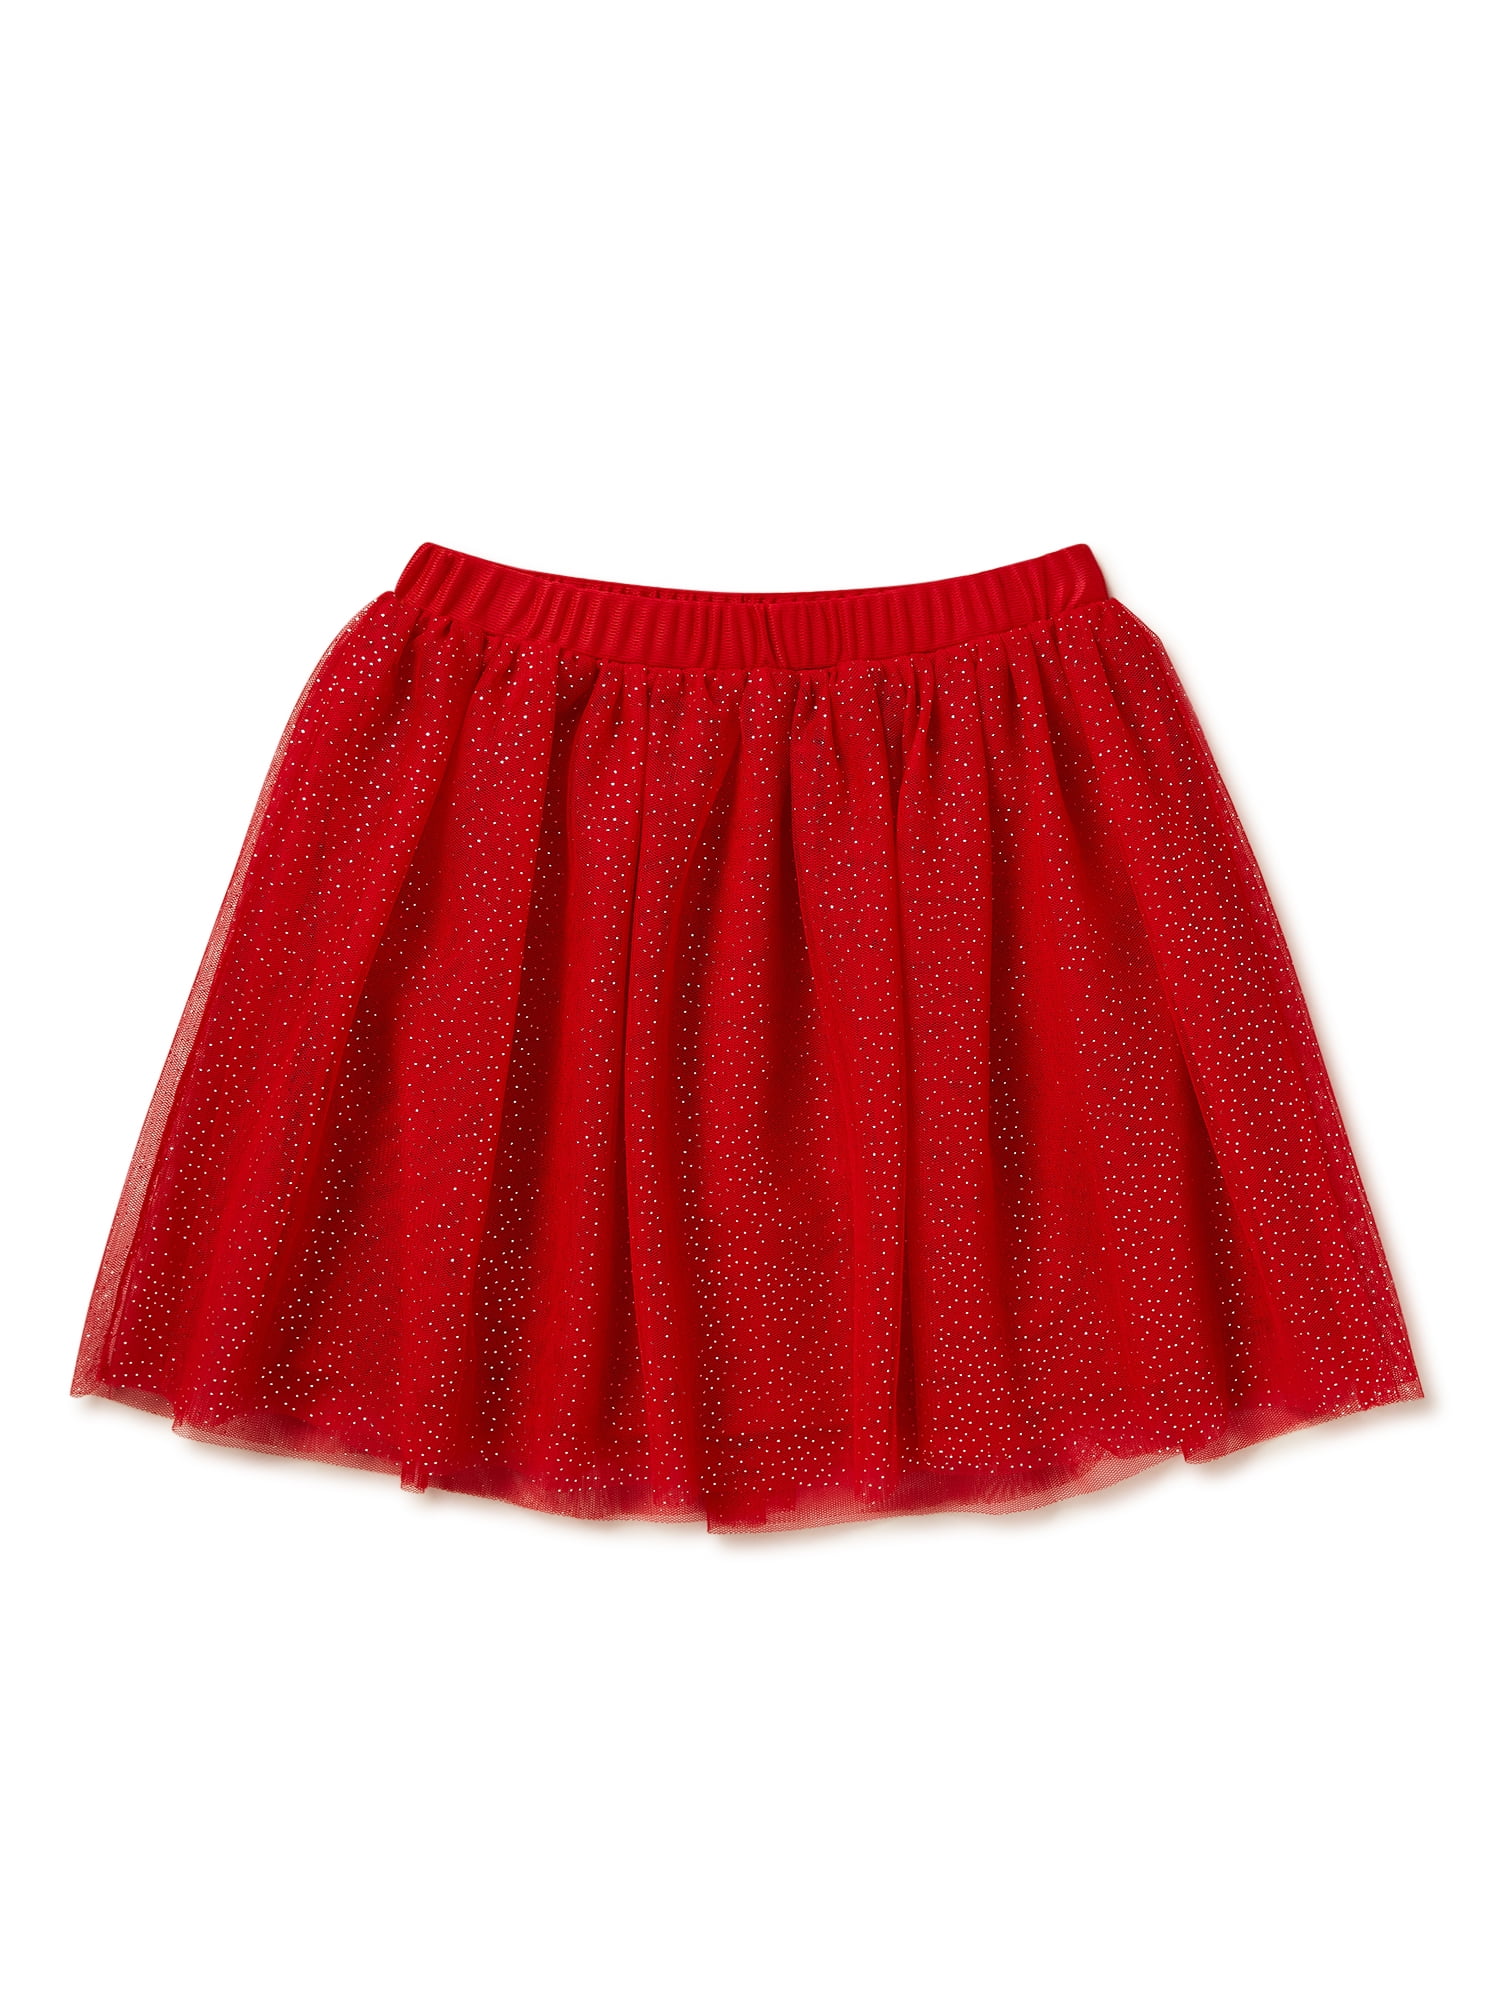 WAY TO CELEBRATE! Valentine's Day Girls Mesh Skirt, Sizes 4-18